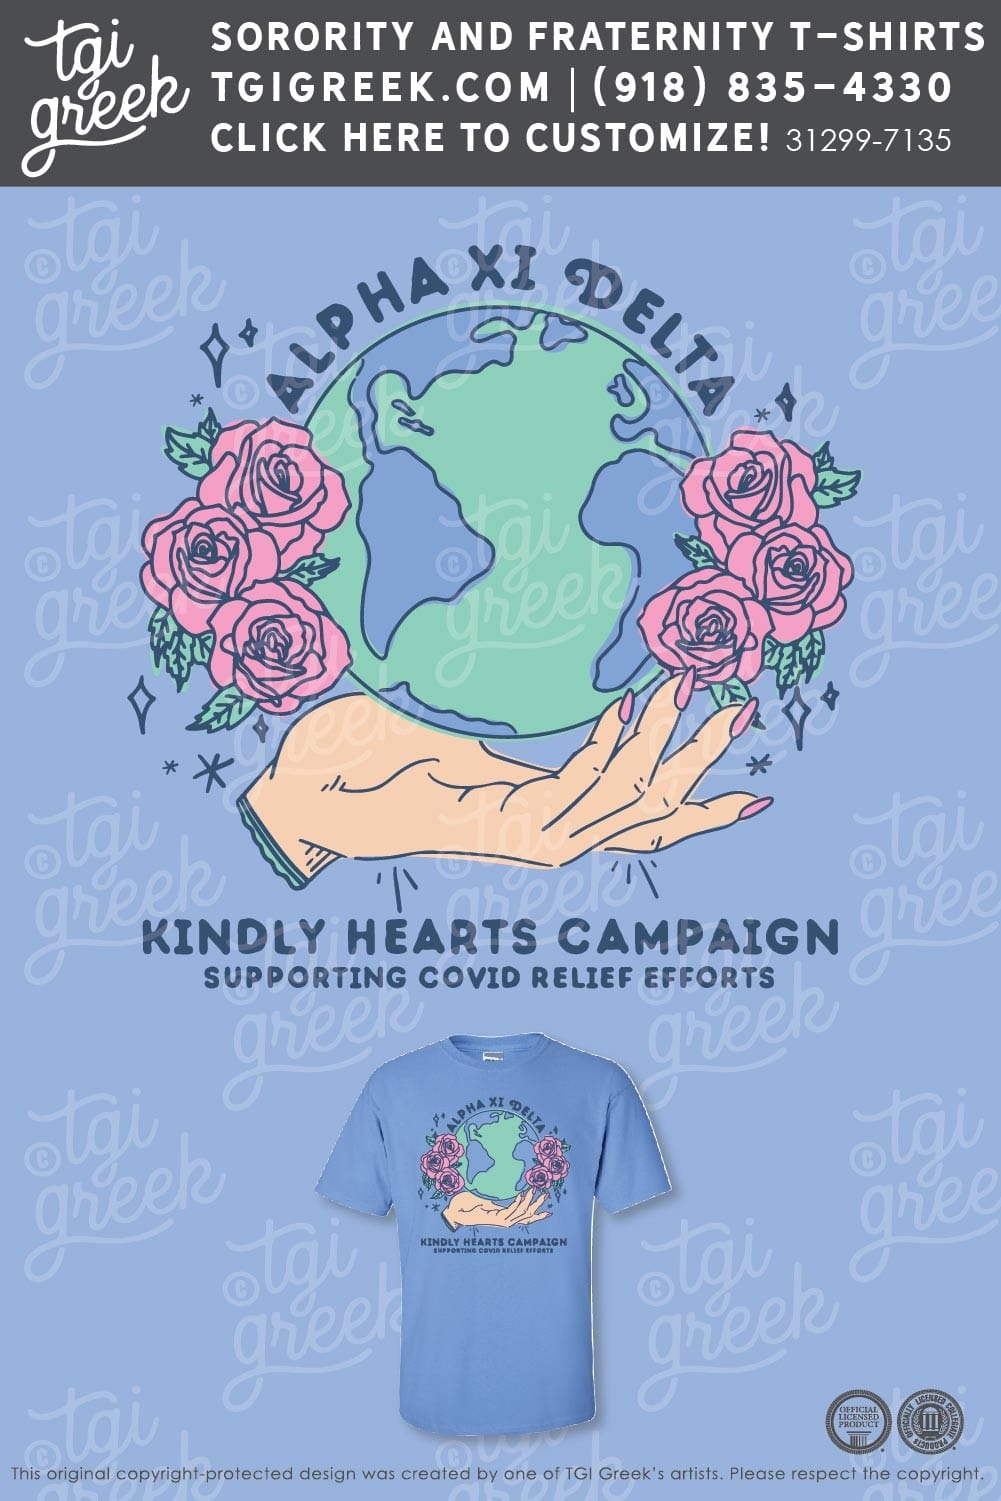 Custom Philanthropy Fraternity Shirts - Greek TShirts